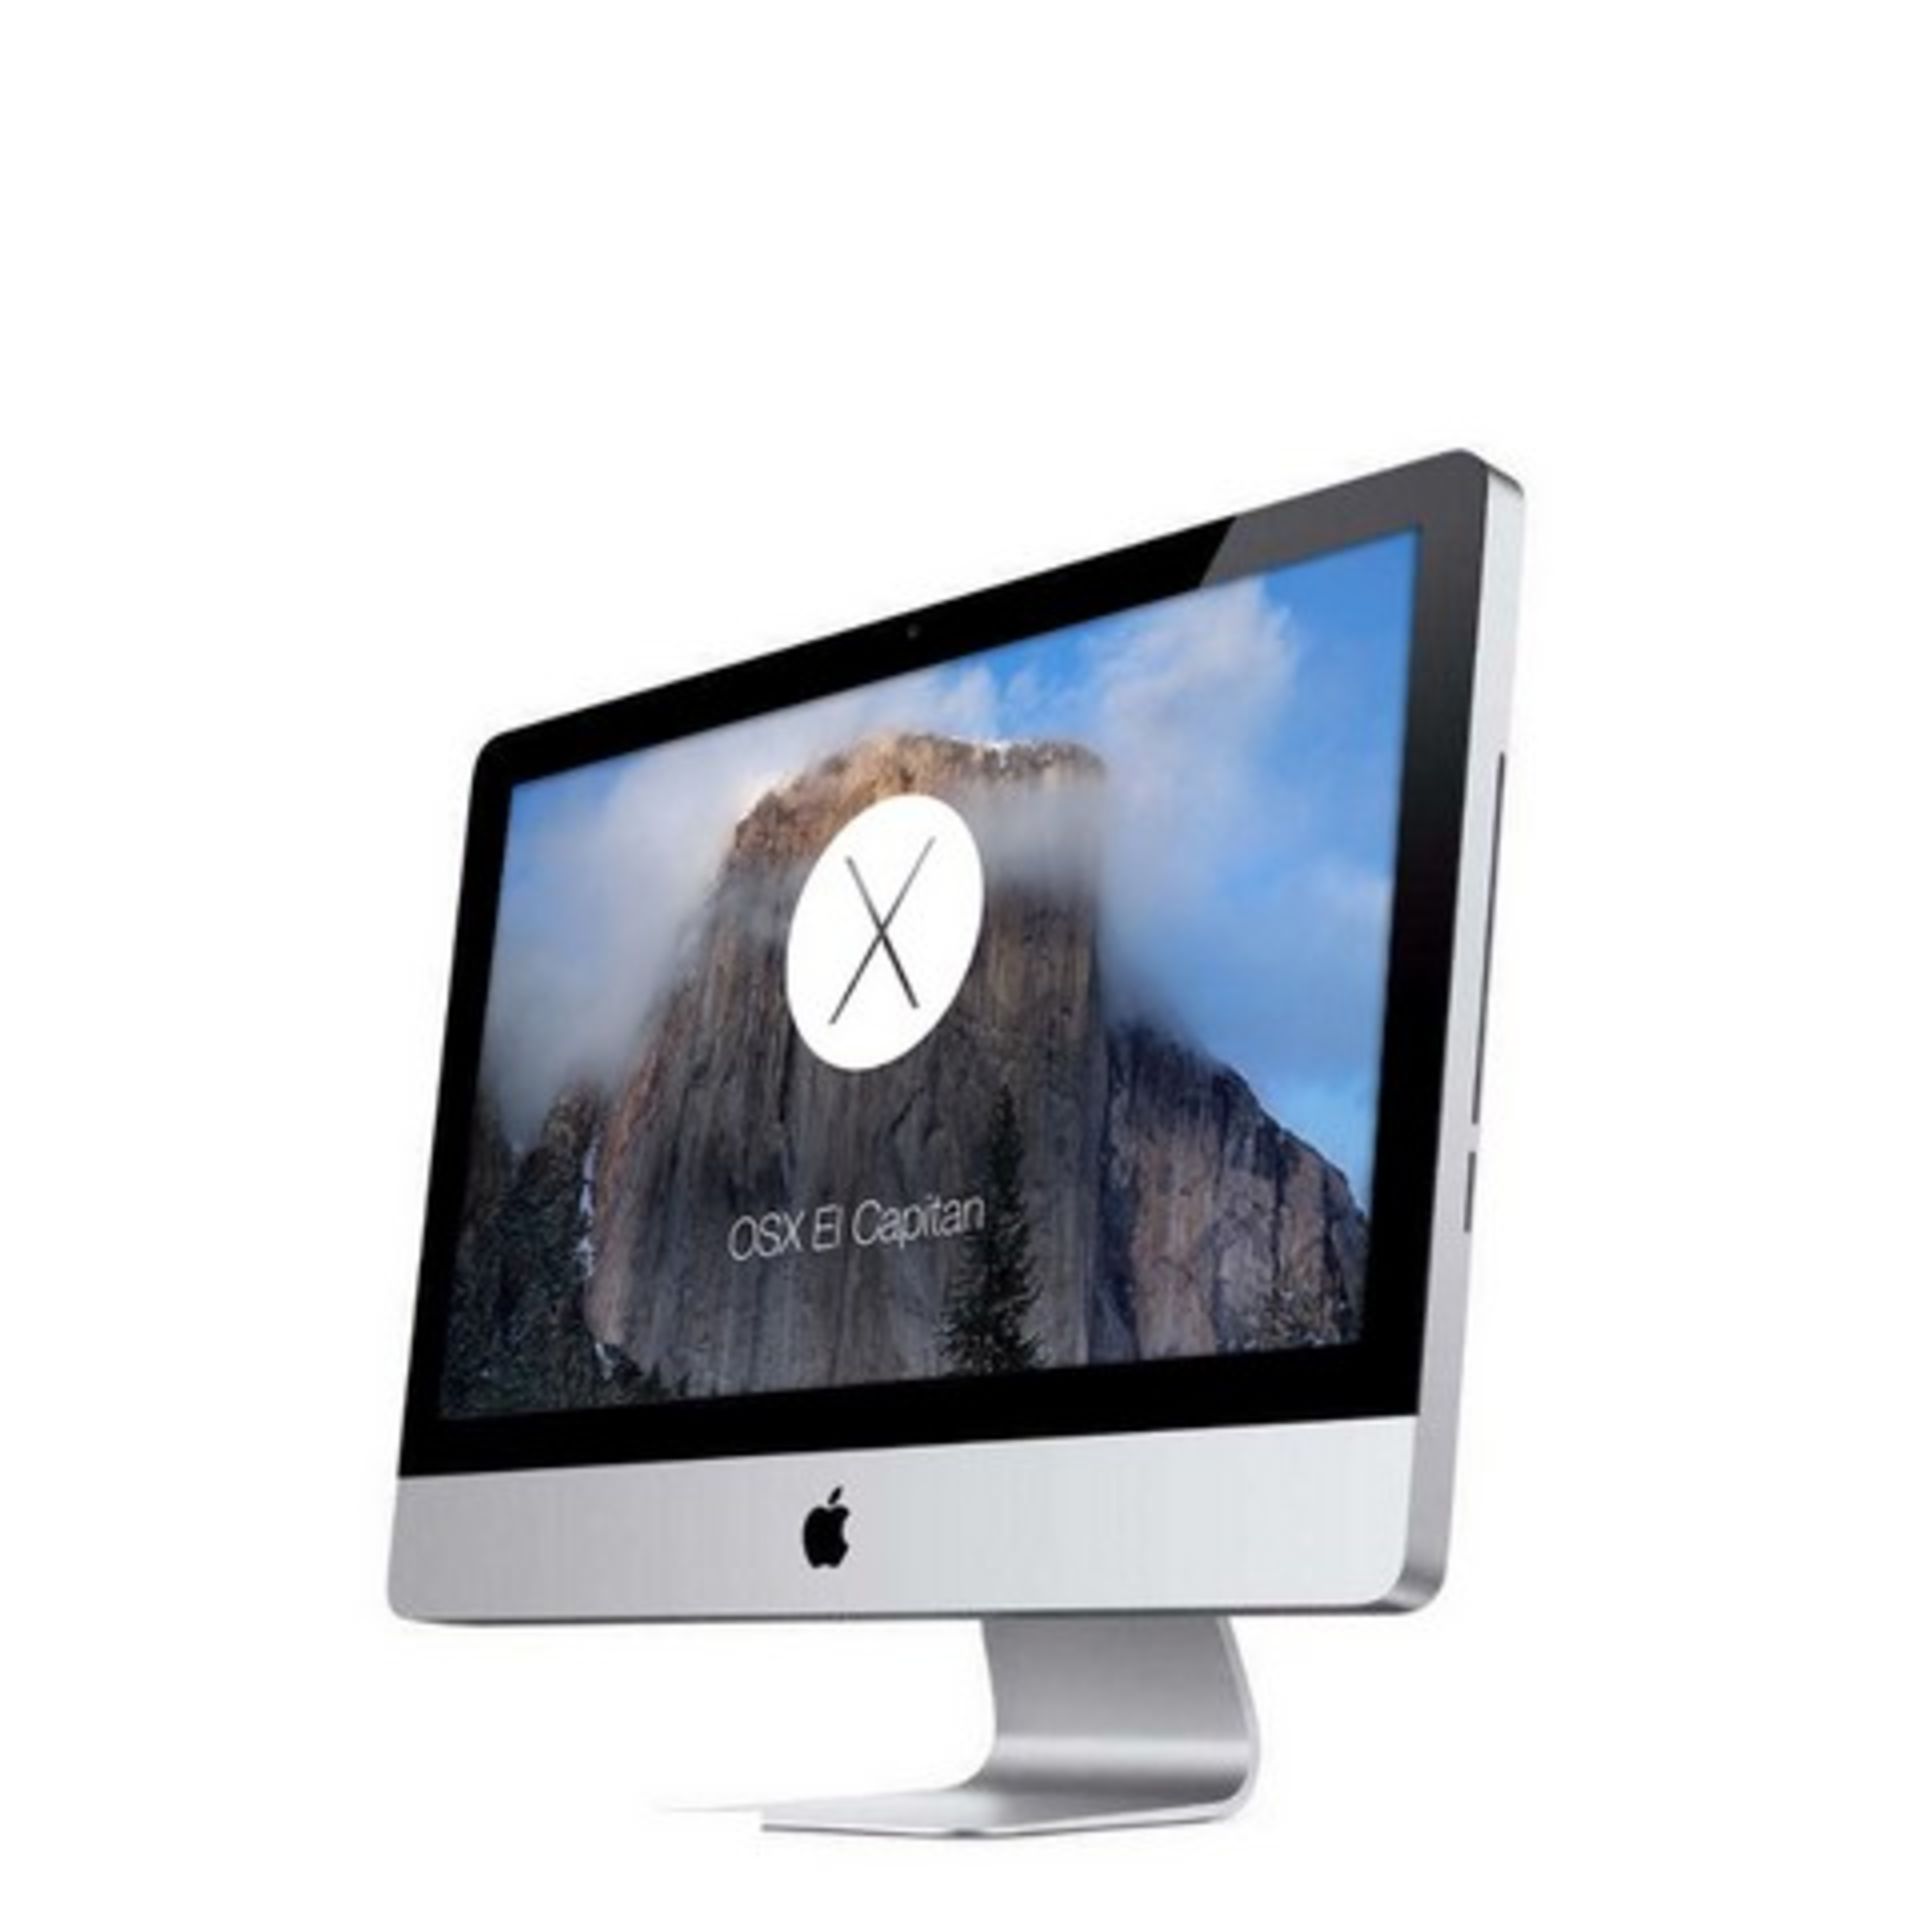 V Grade C Apple iMac 20" Core 2 Duo - 2GHZ Processor - 4GB RAM - 250GB Hard Drive - Apple OSX El